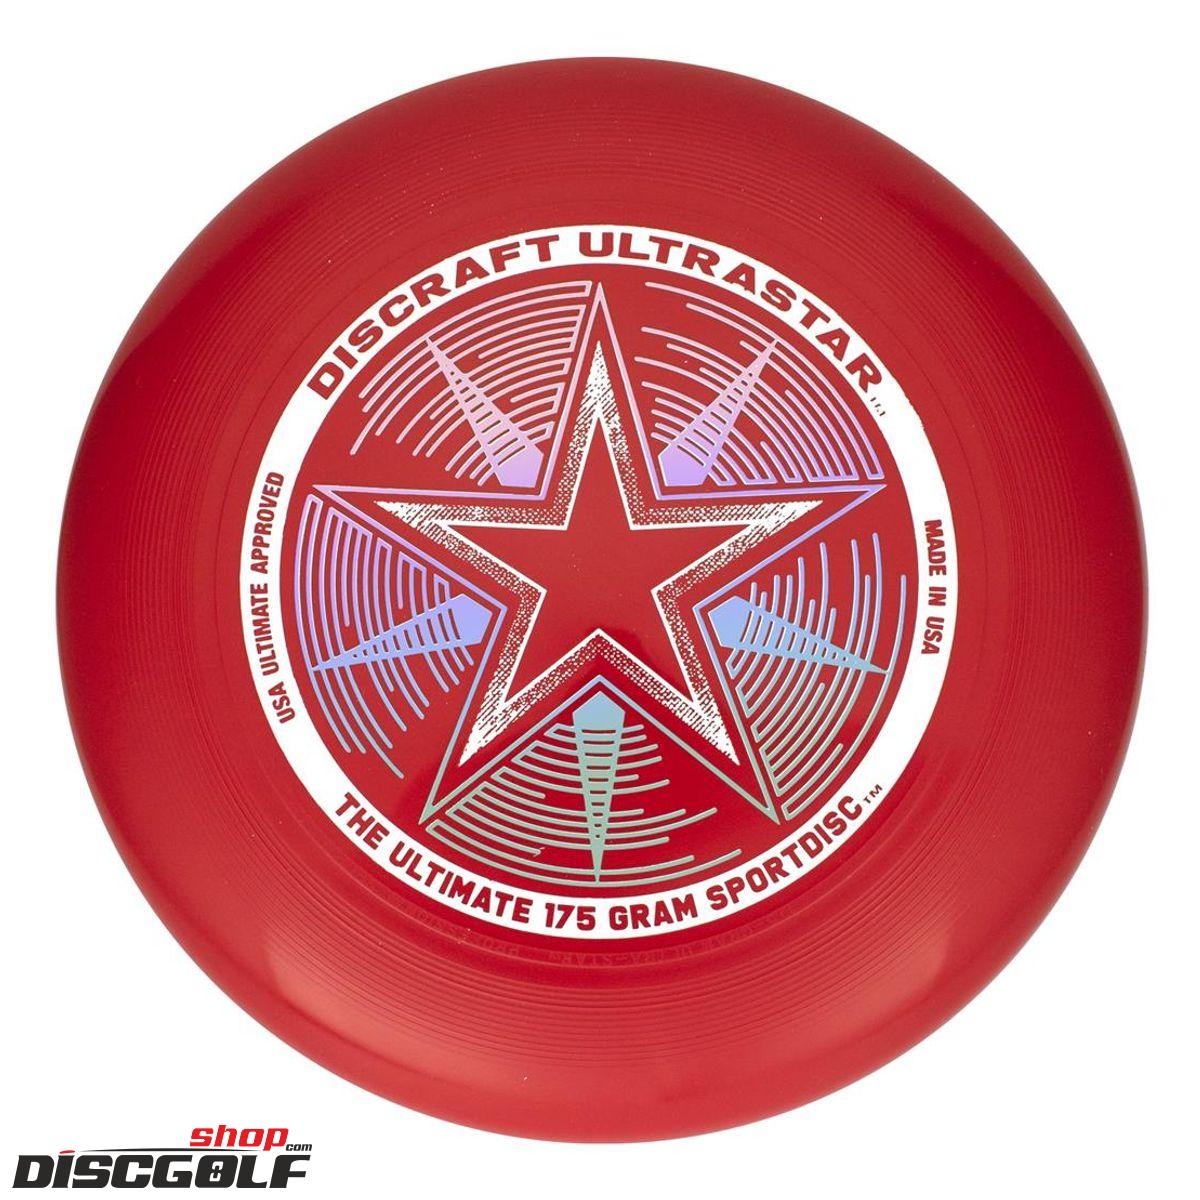 Discraft UltraStar Červená-tmavá/Red-dark (discgolf)